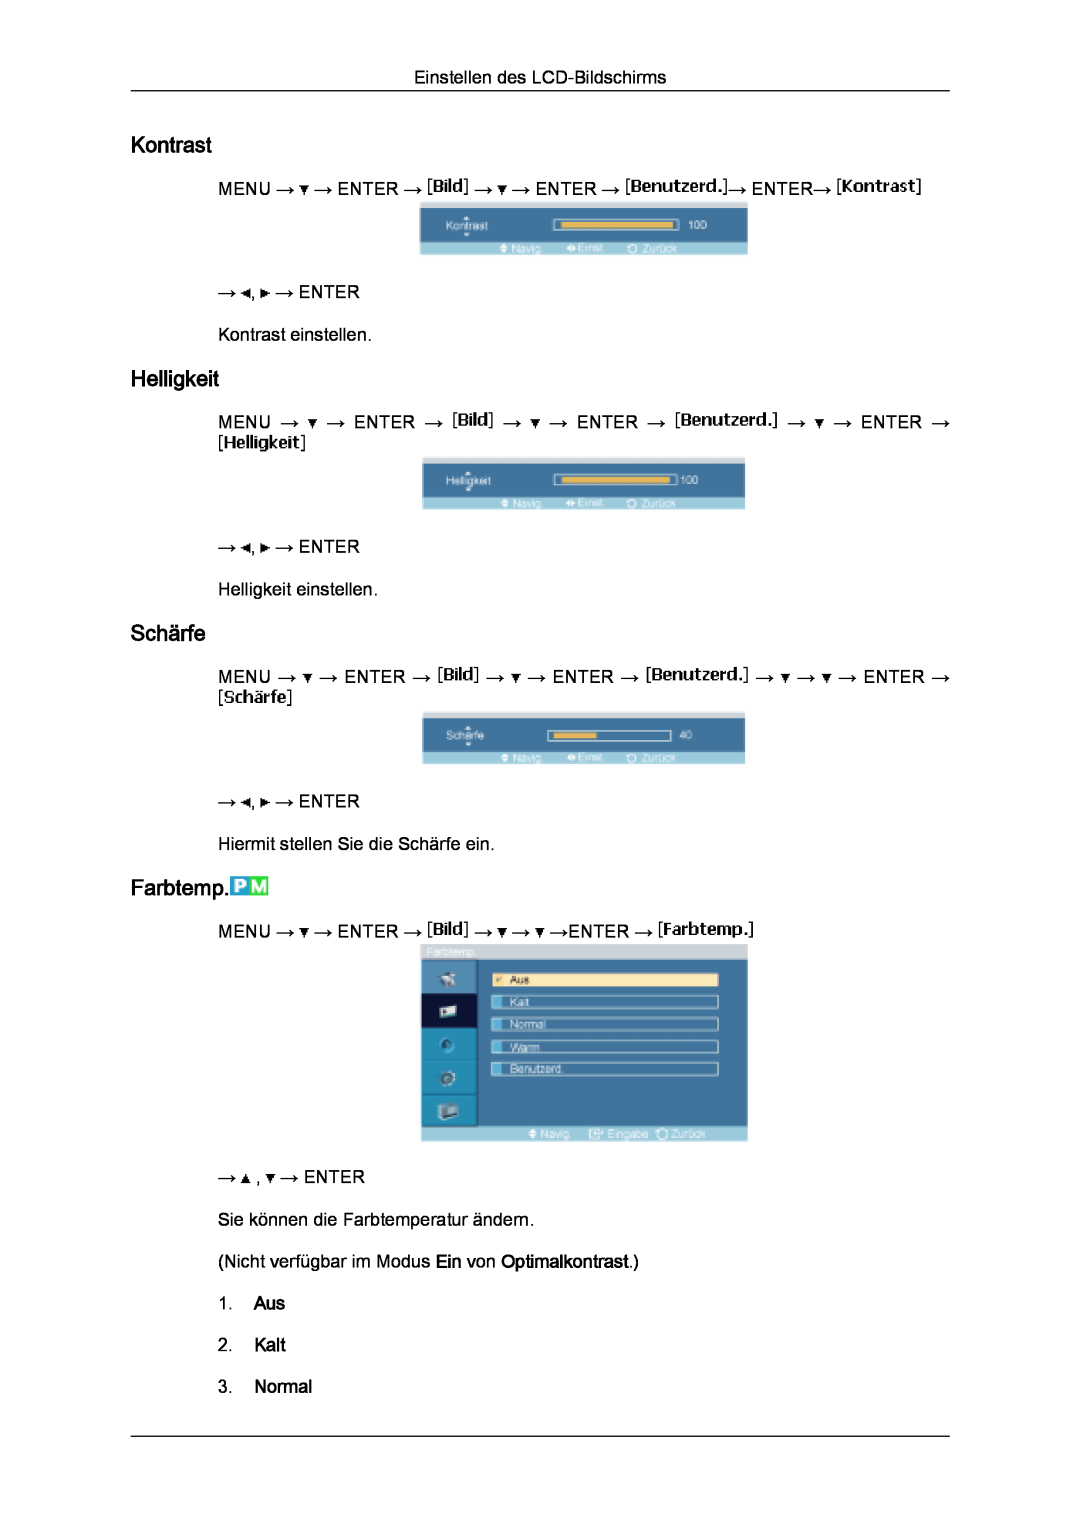 Samsung LH32MGULBC/EN, LH32MGQLBC/EN, LH32MGQPBC/EN manual Kontrast, Helligkeit, Schärfe, Farbtemp, Aus 2. Kalt 3. Normal 